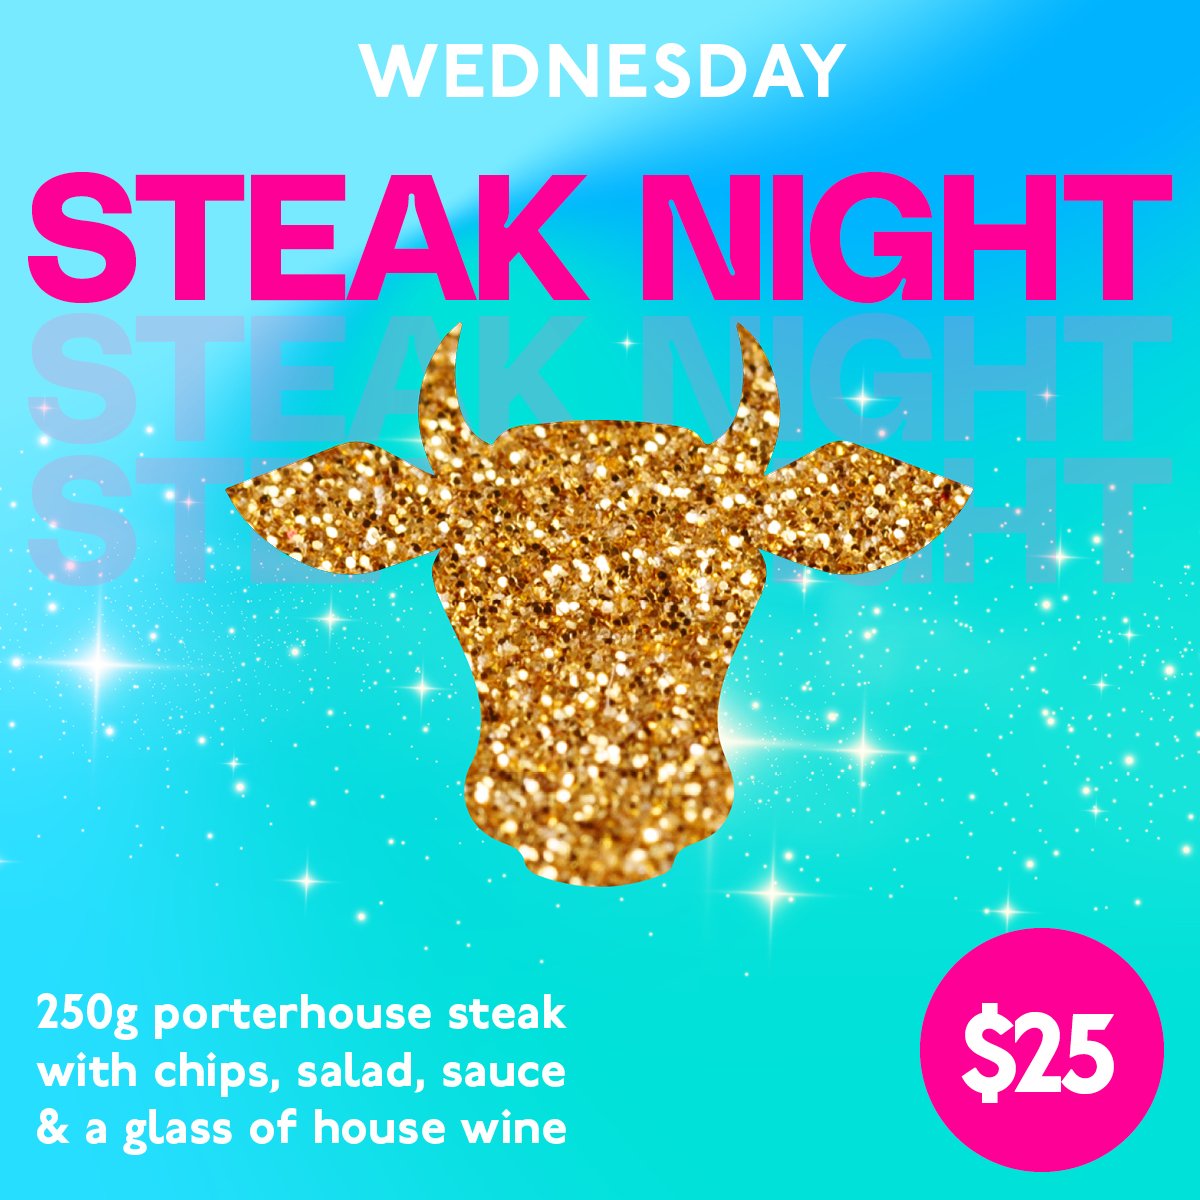 Steak night_wednesday food special